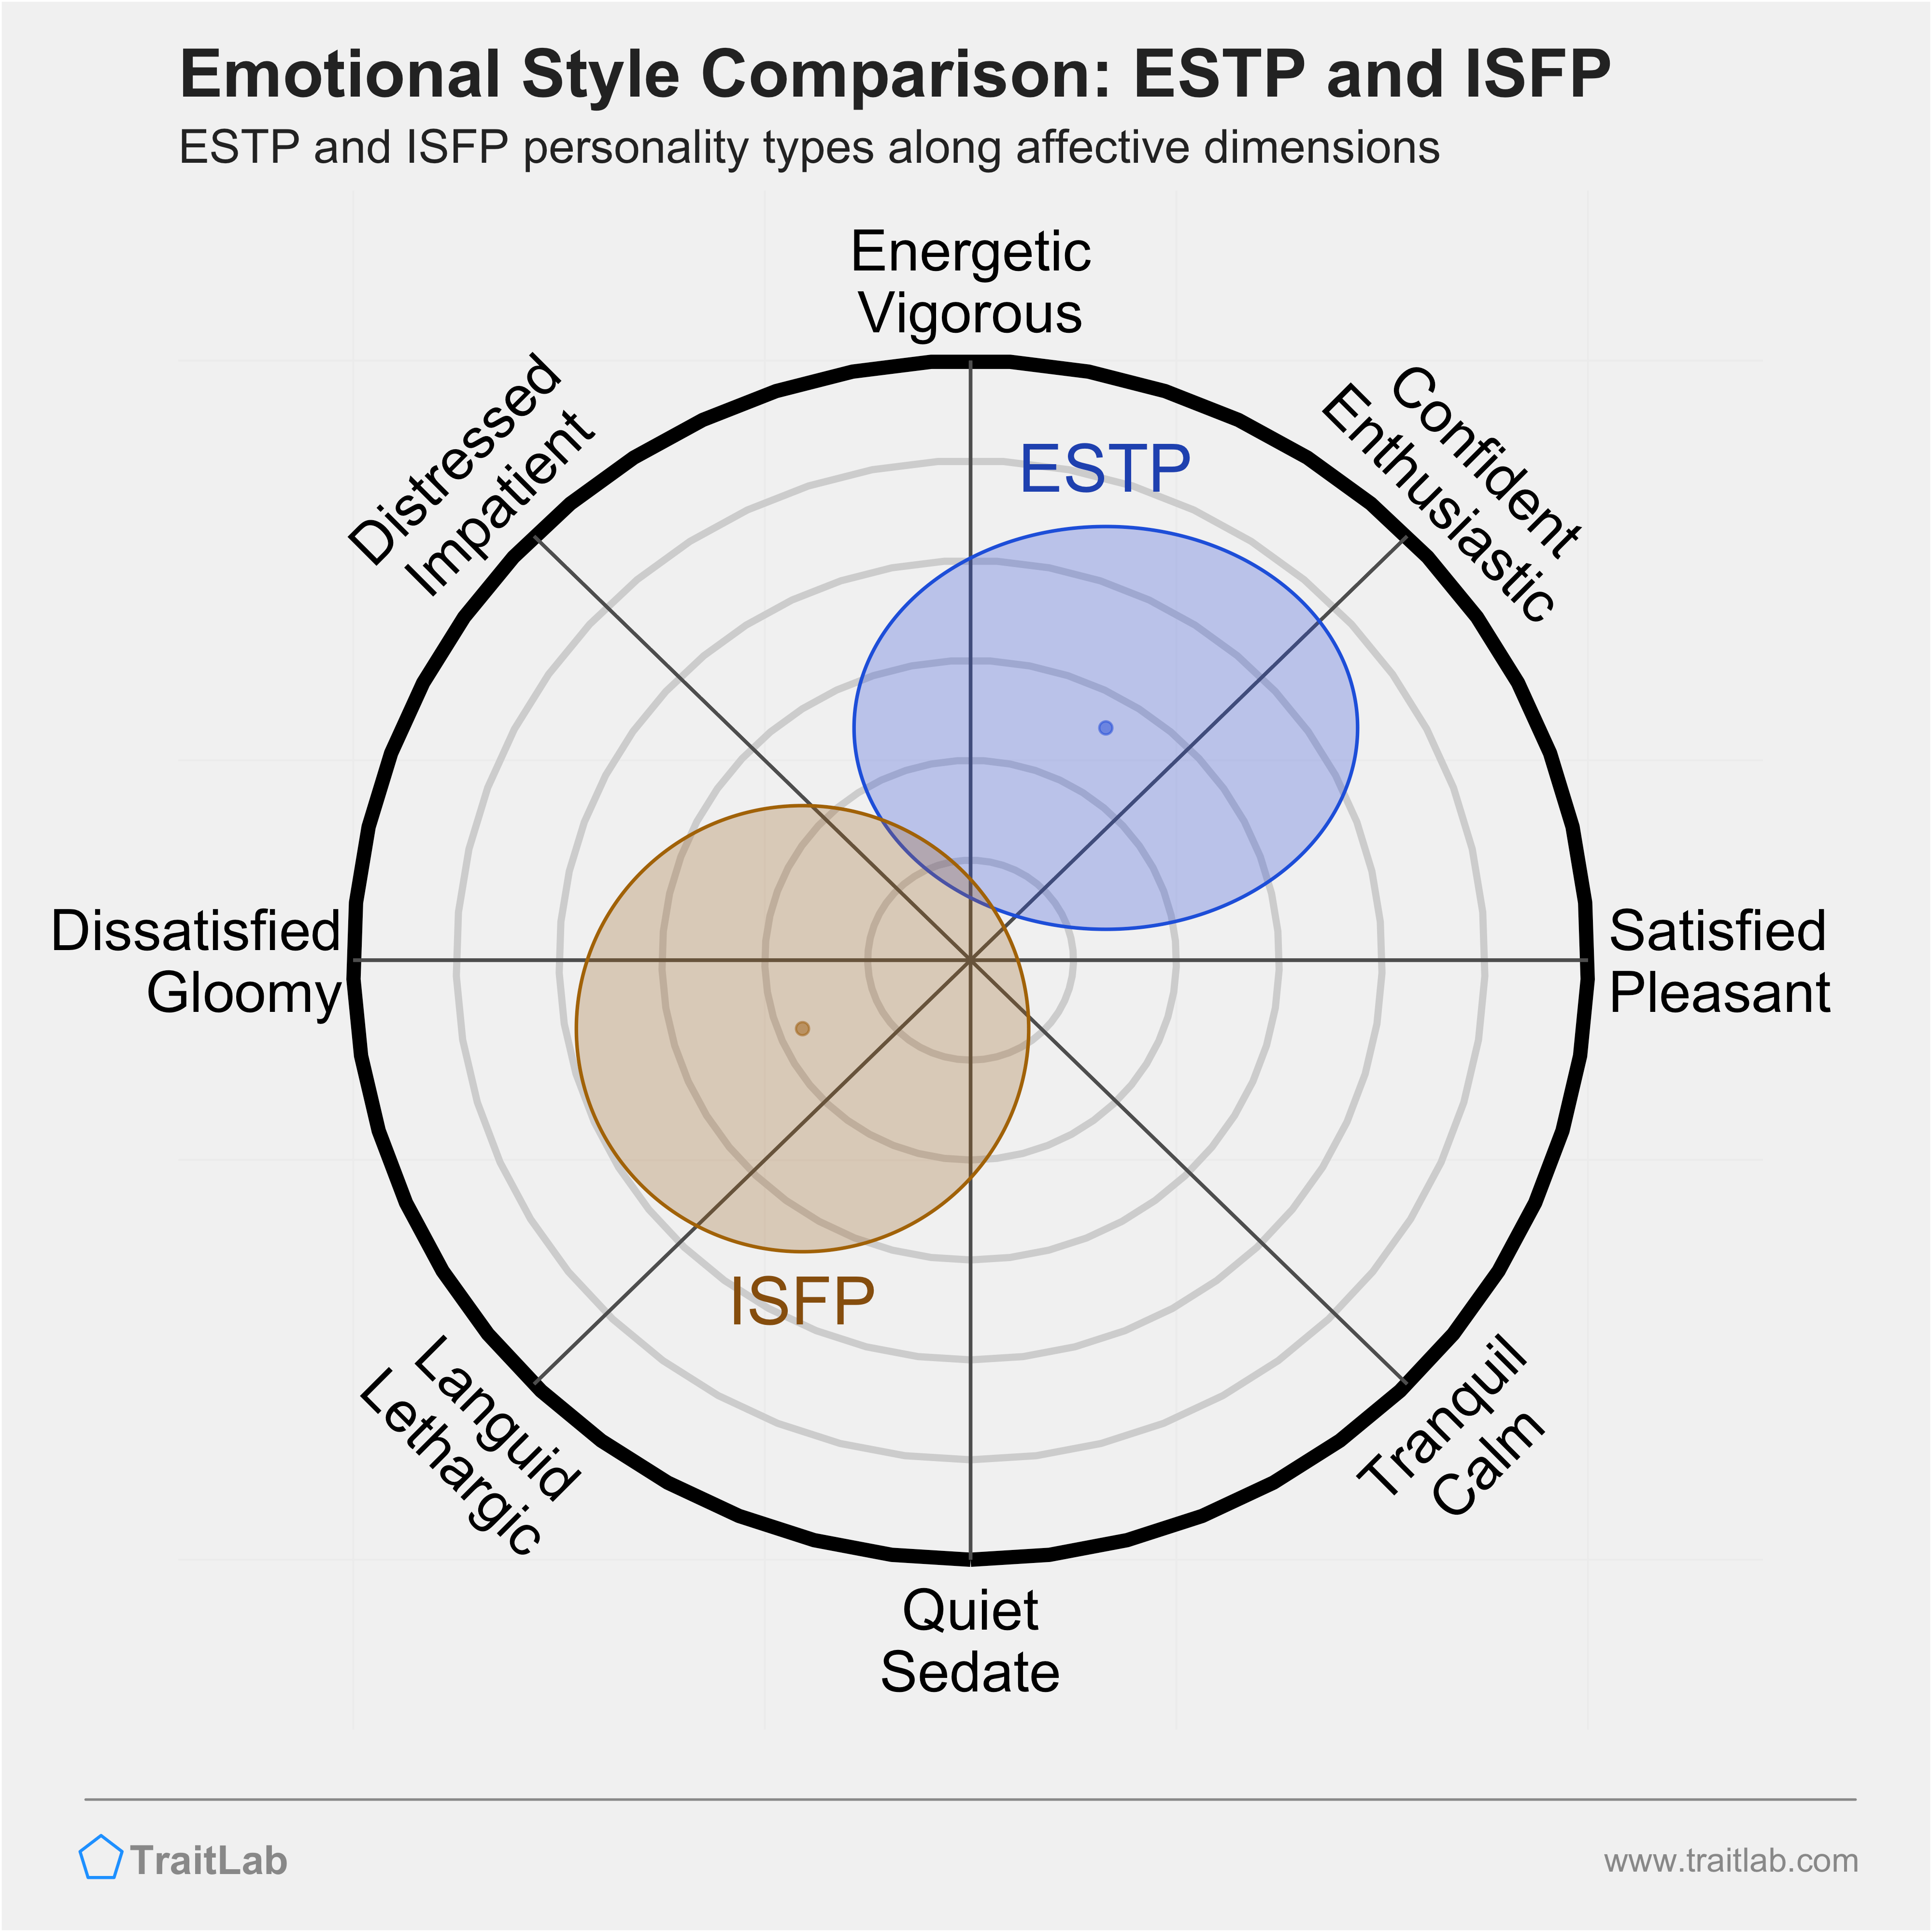 ESTP and ISFP comparison across emotional (affective) dimensions